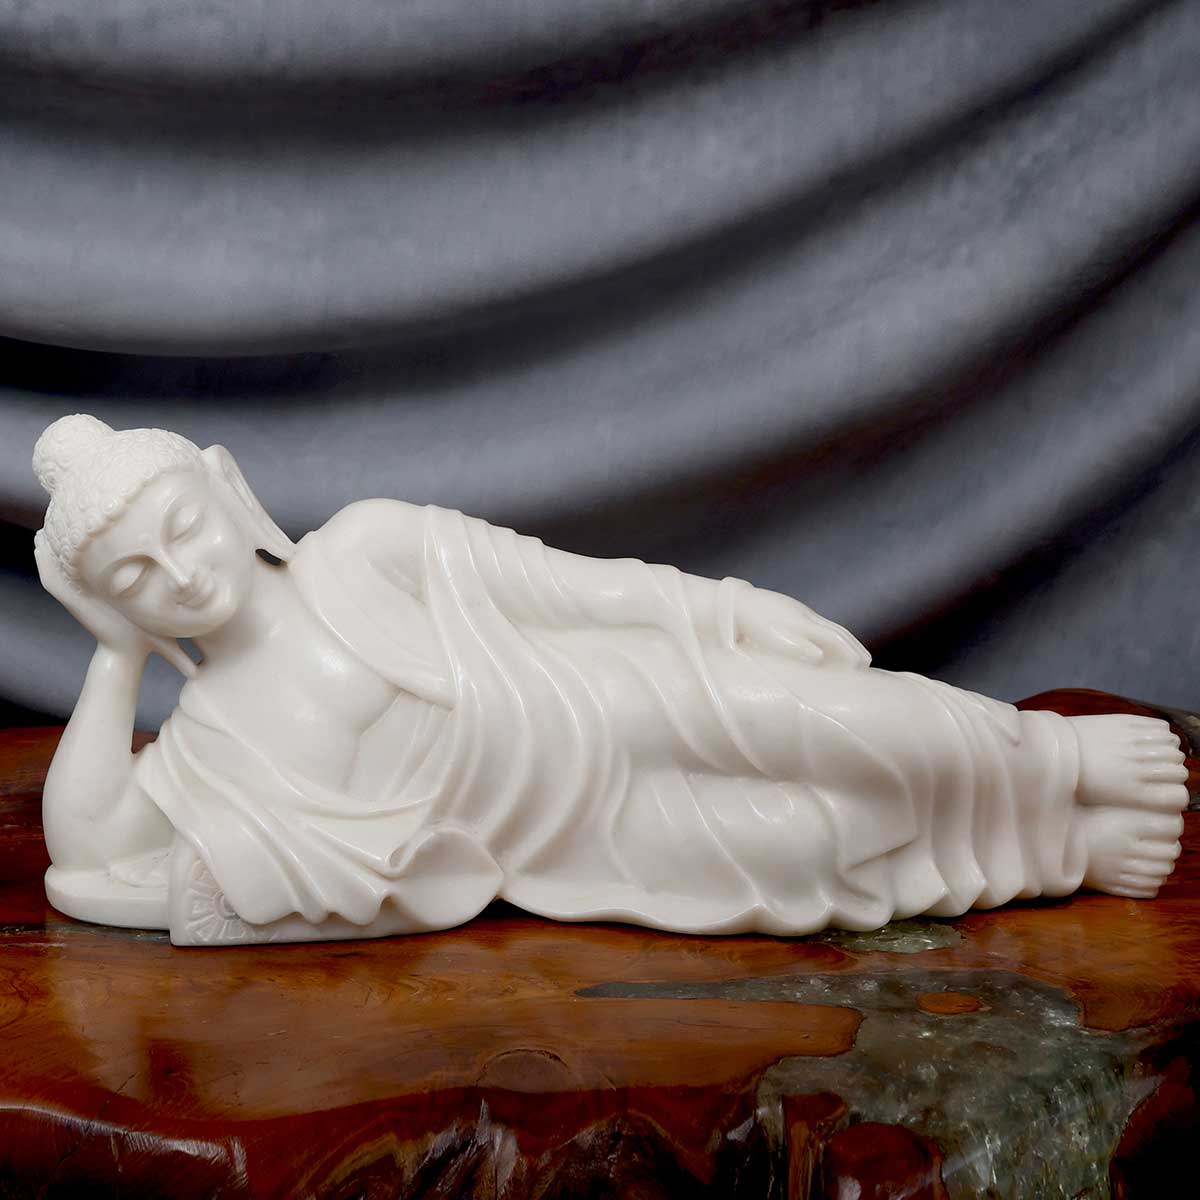 Lord Buddha Sleeping Made of Makrana Marble - 24 x 7 x 10 Inch, 30 Kg